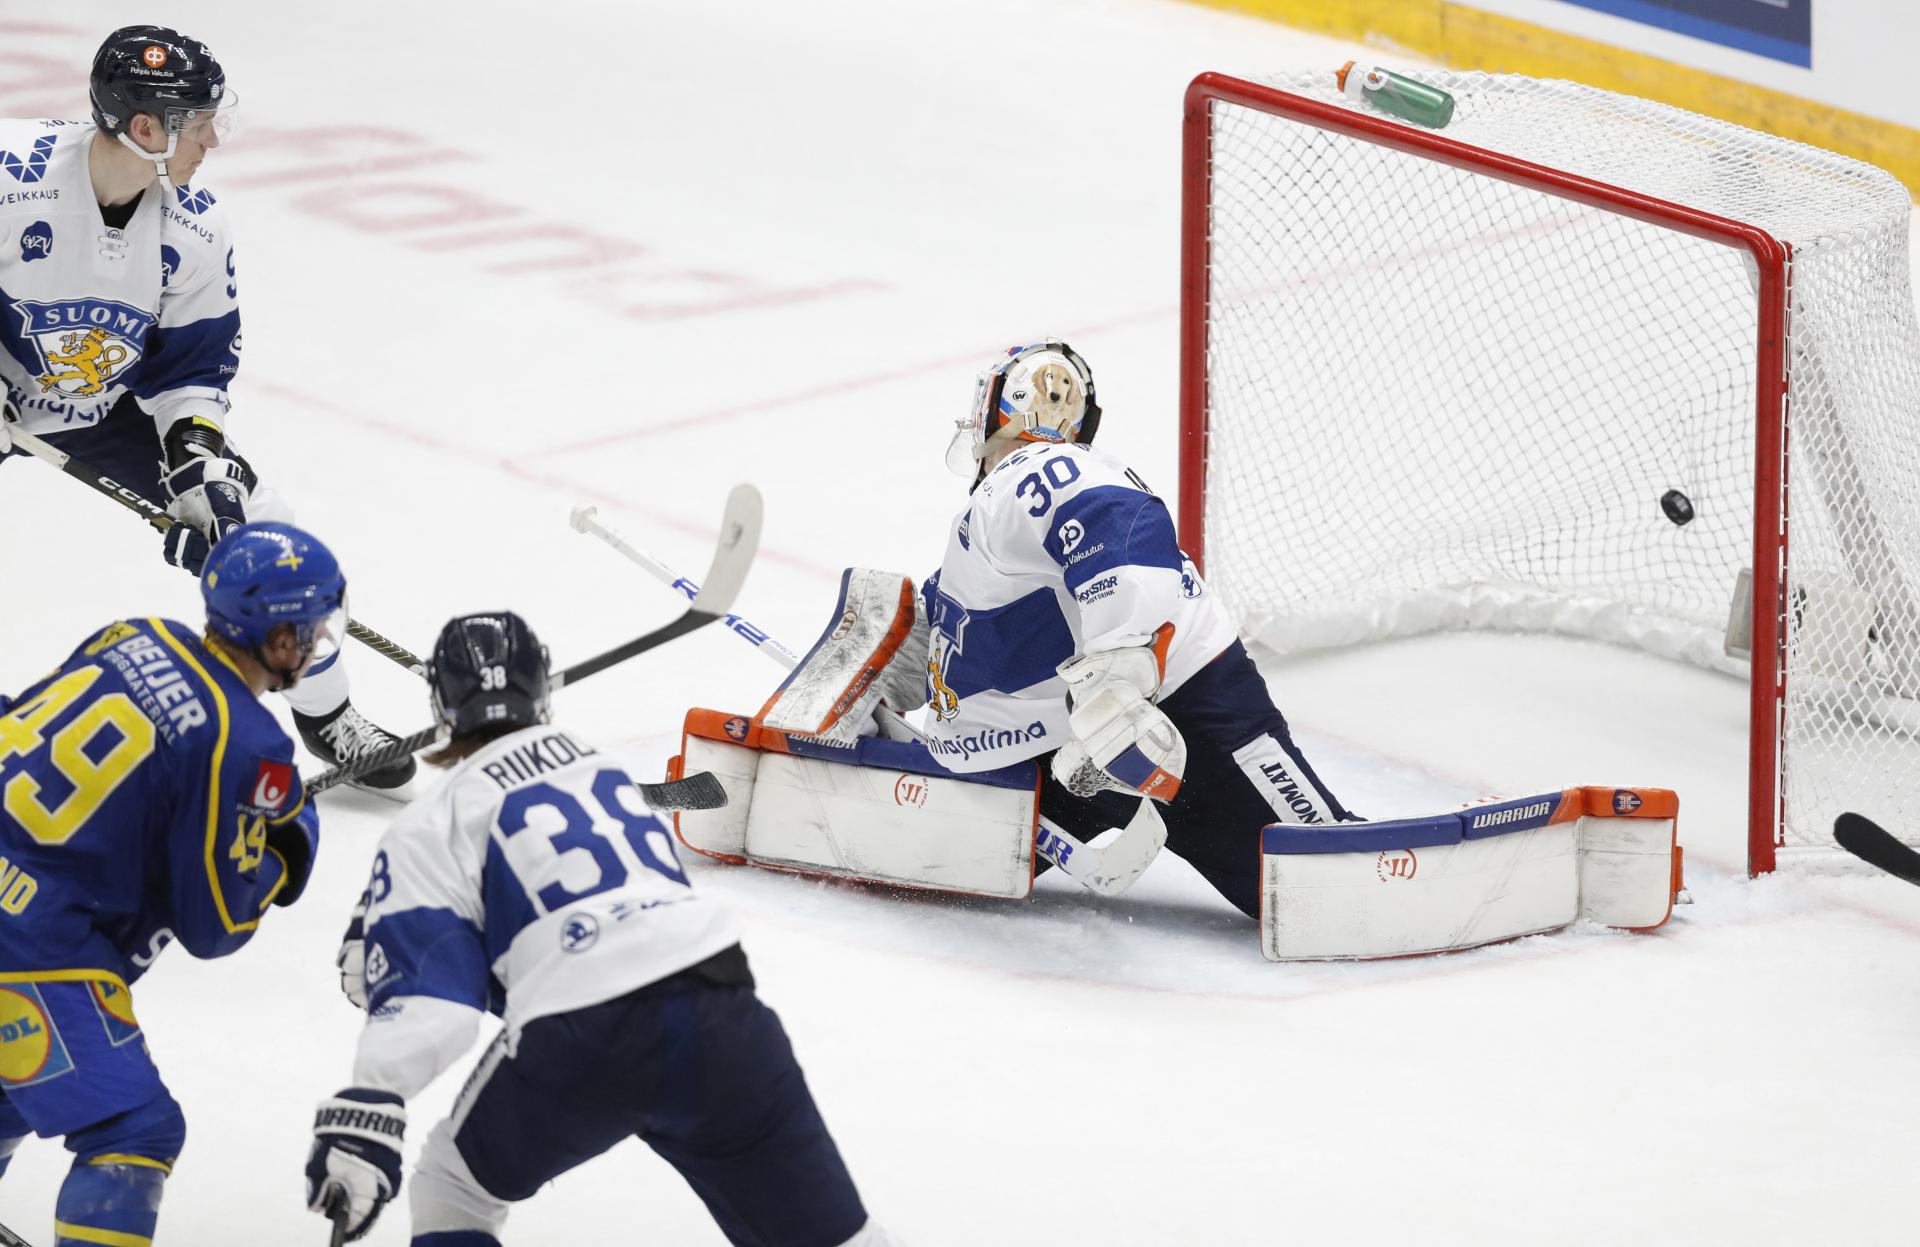 Le programme complet des CM de hockey en Finlande et en Lettonie